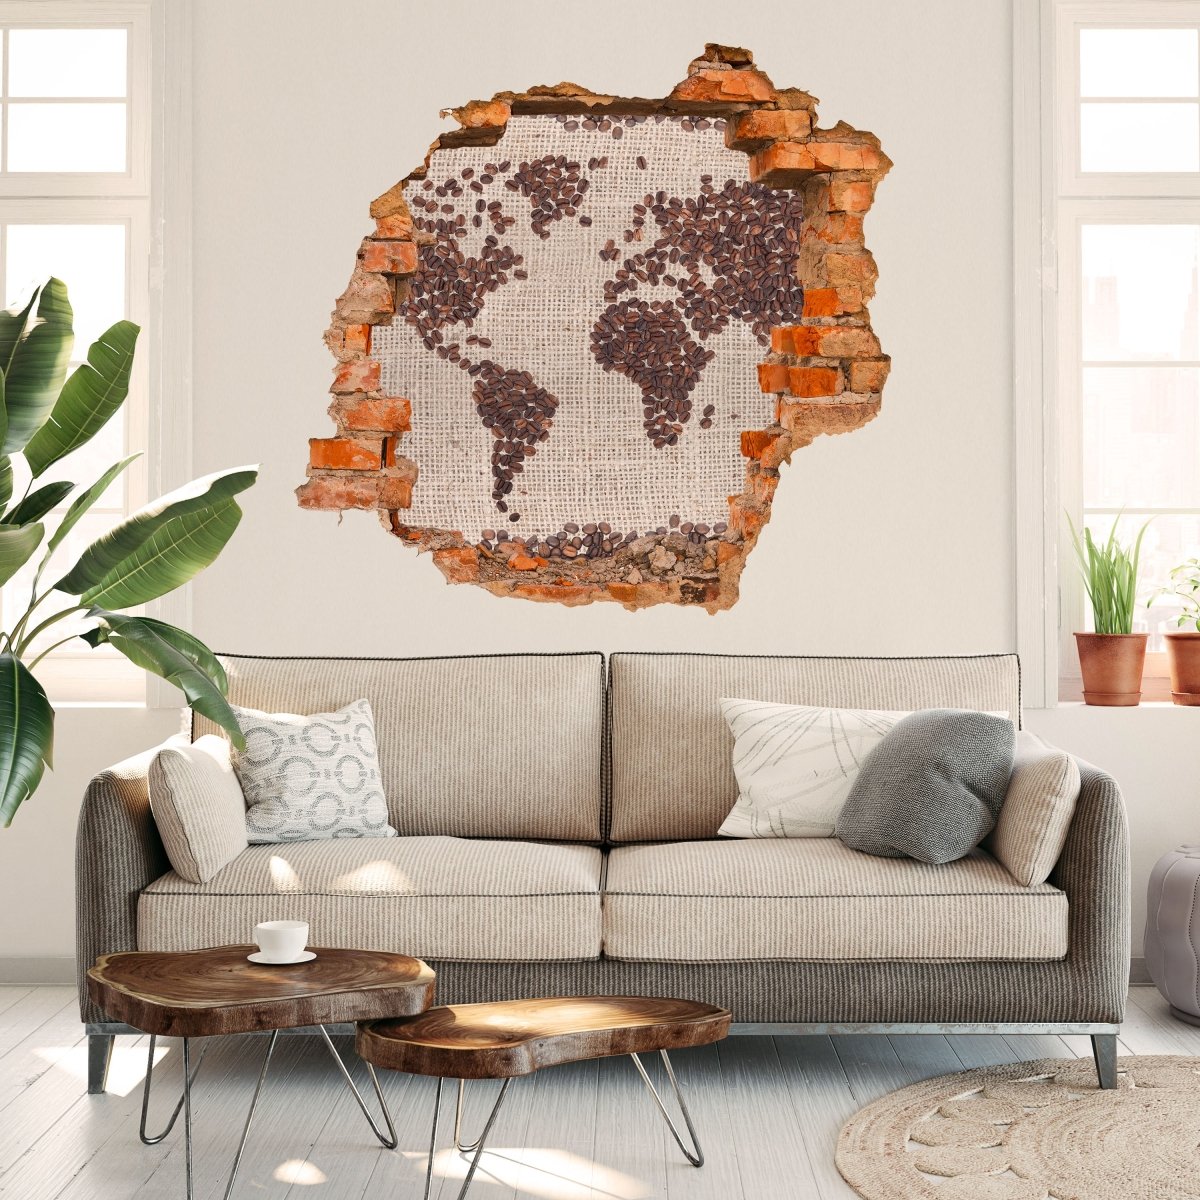 3D Wall Sticker World Map Coffee - Wall Decal M0012